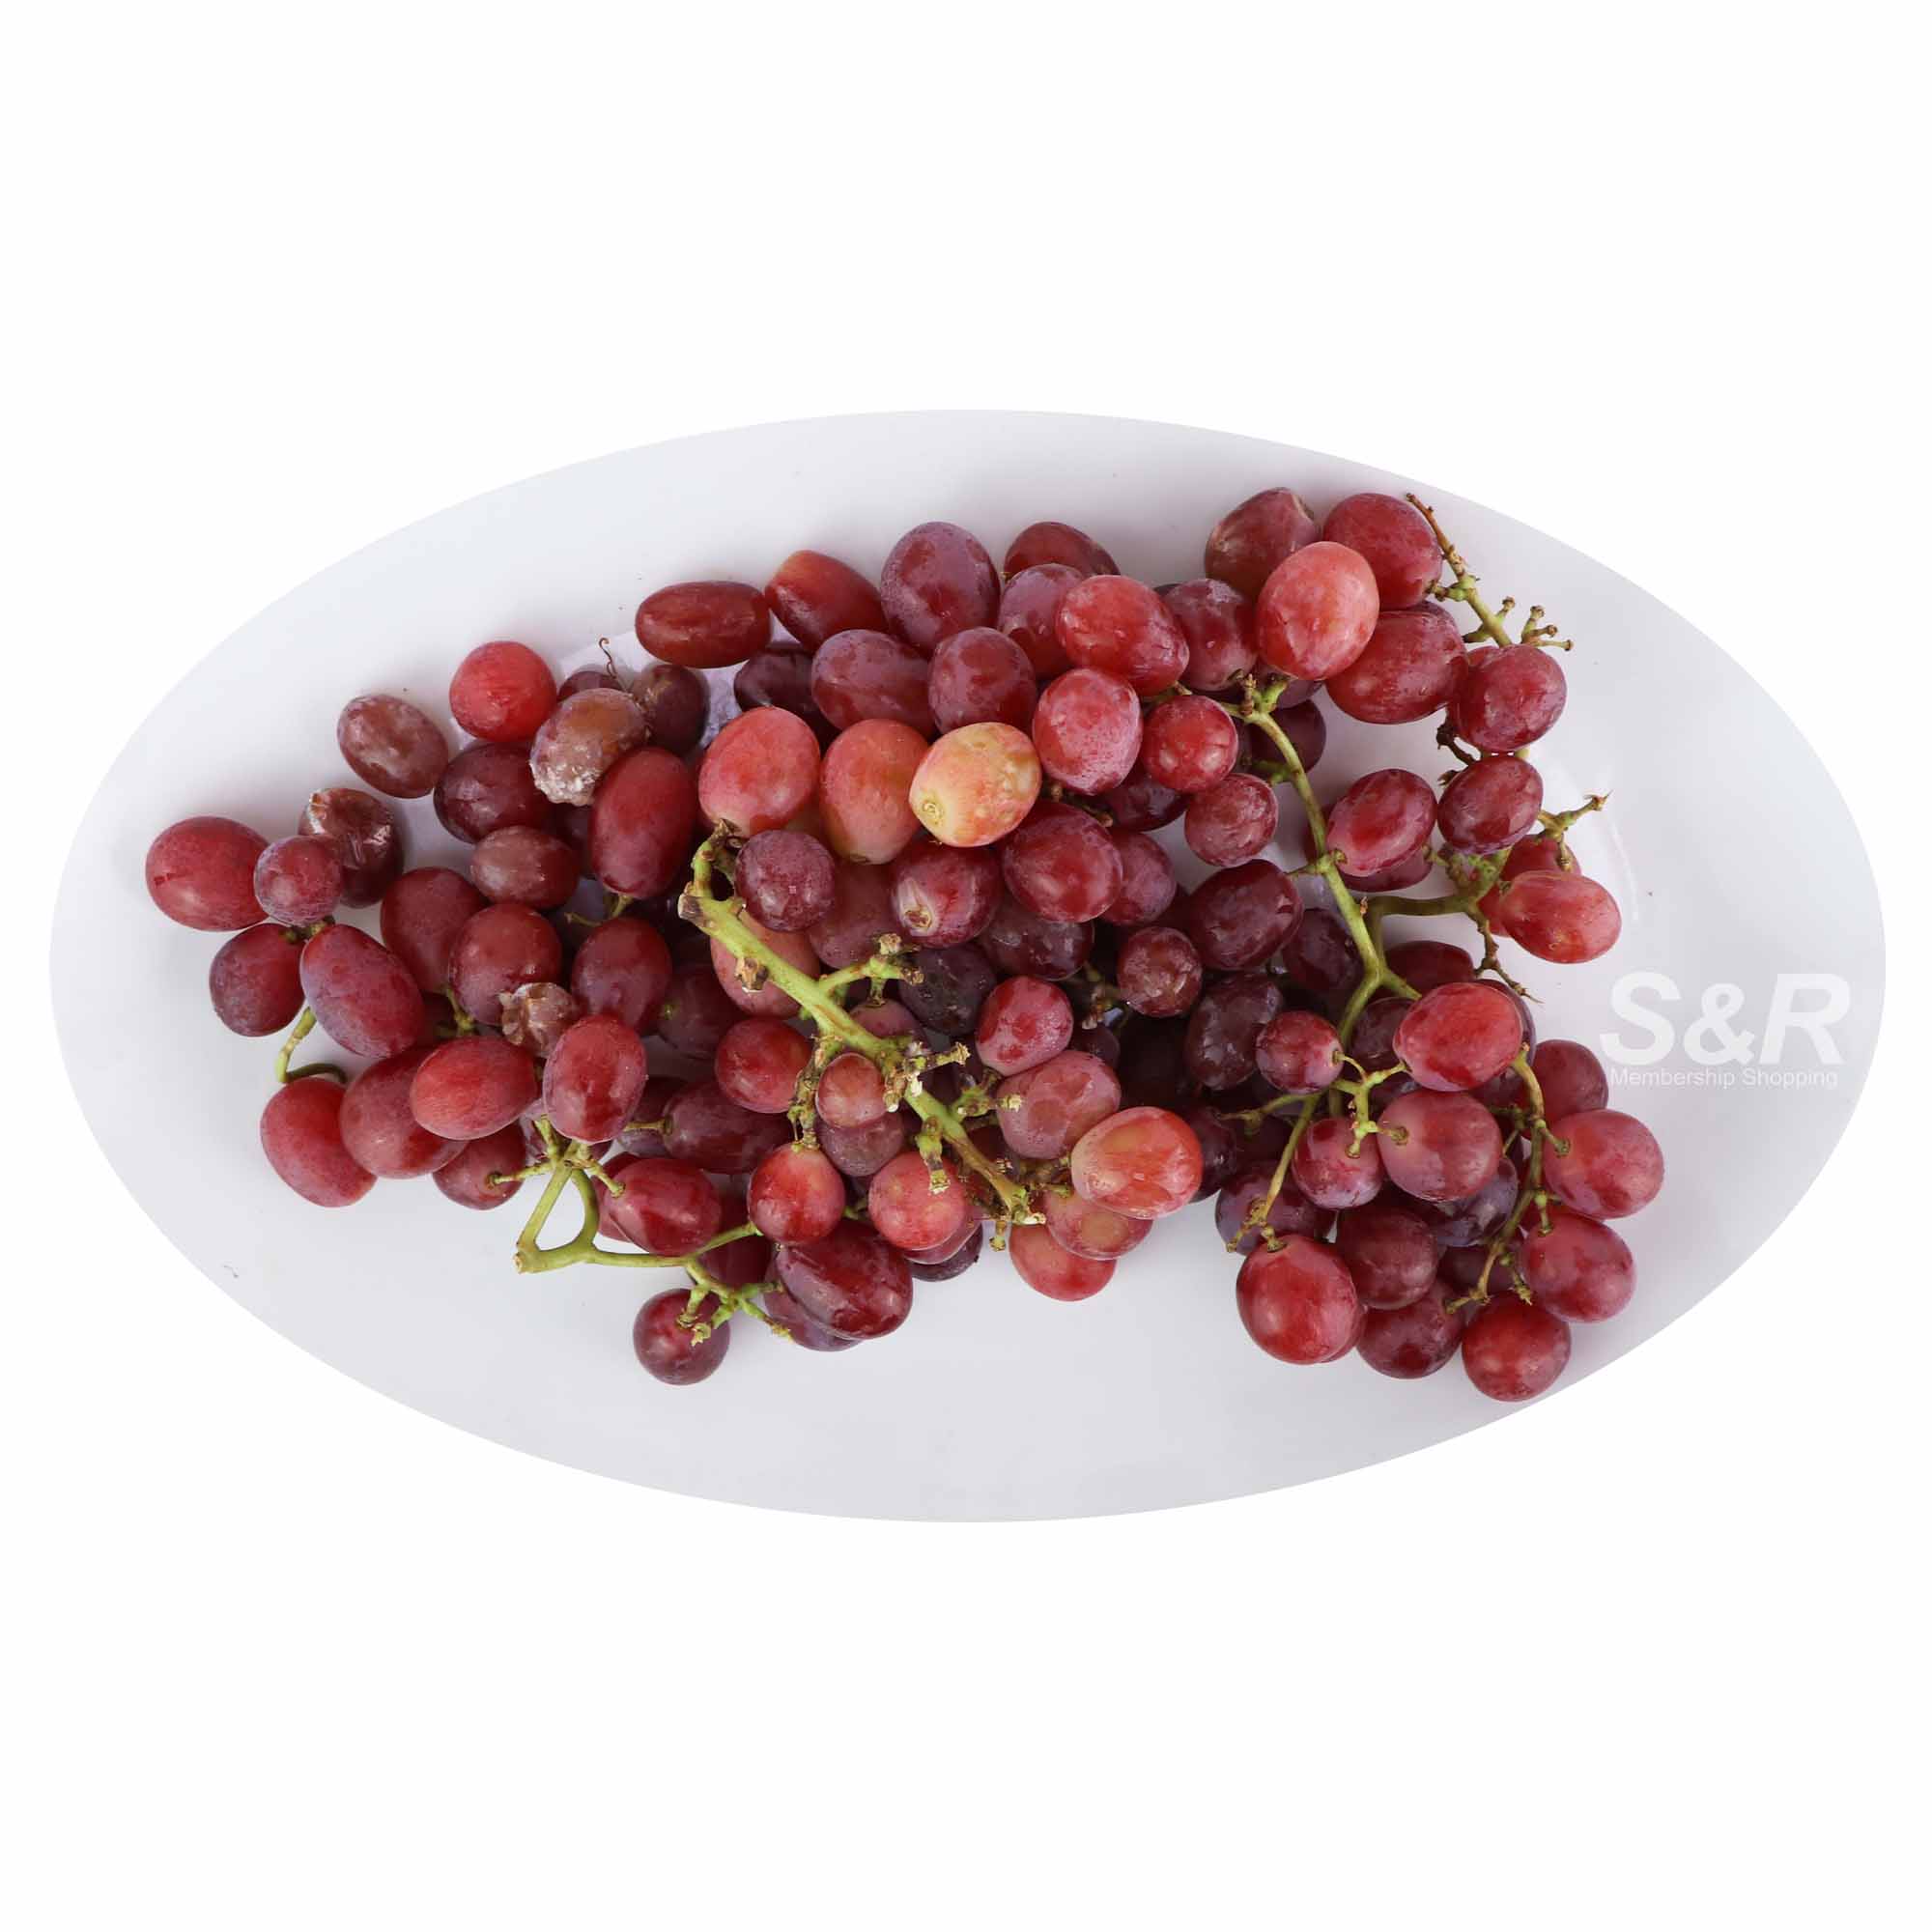 S&R Australian Seedless Crimson Red Grapes approx. 1.3kg